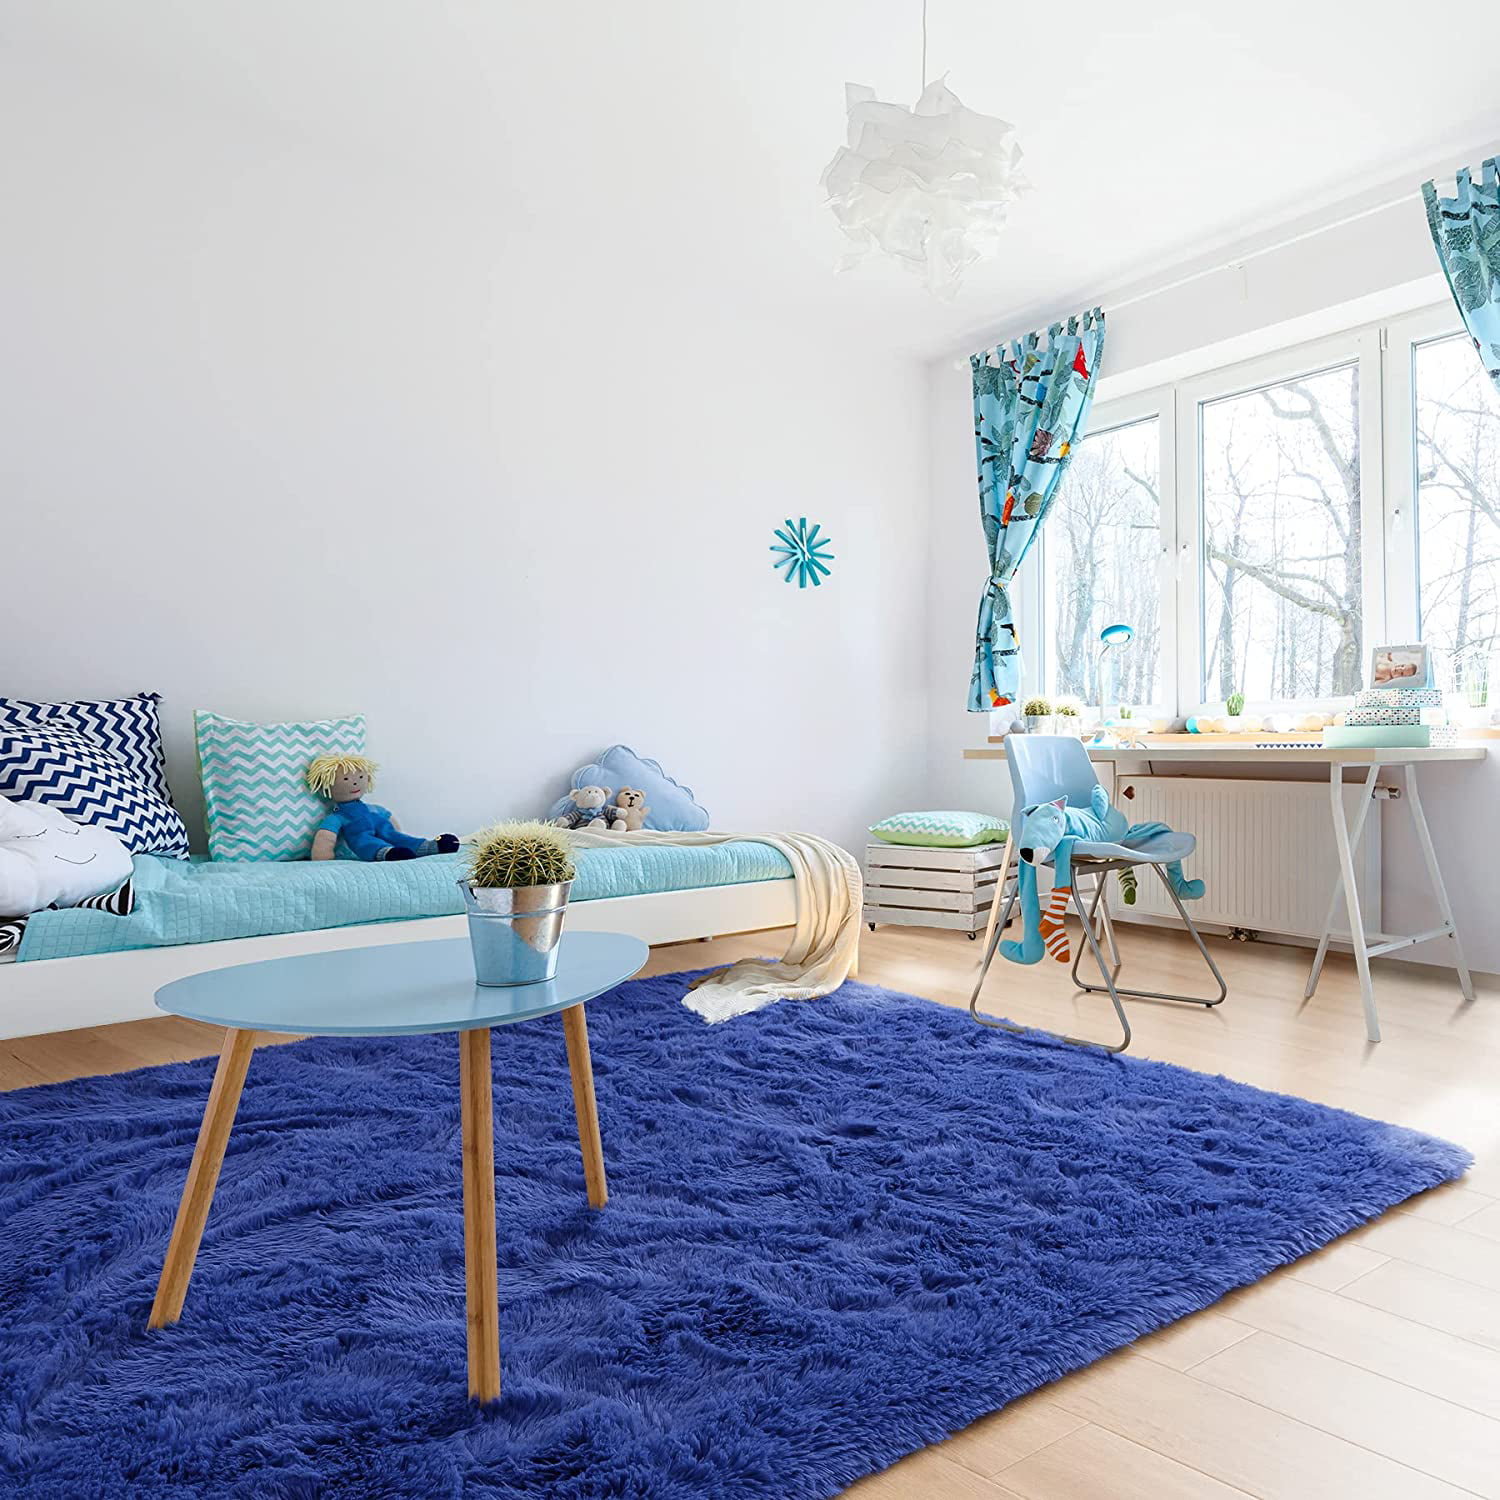 TWINNIS Luxury Fluffy Rugs Ultra Soft Shag Rug Carpet for Bedroom Living Room,Kids Room, Nursery,4x5.3 Feet,Indigo - image 4 of 8